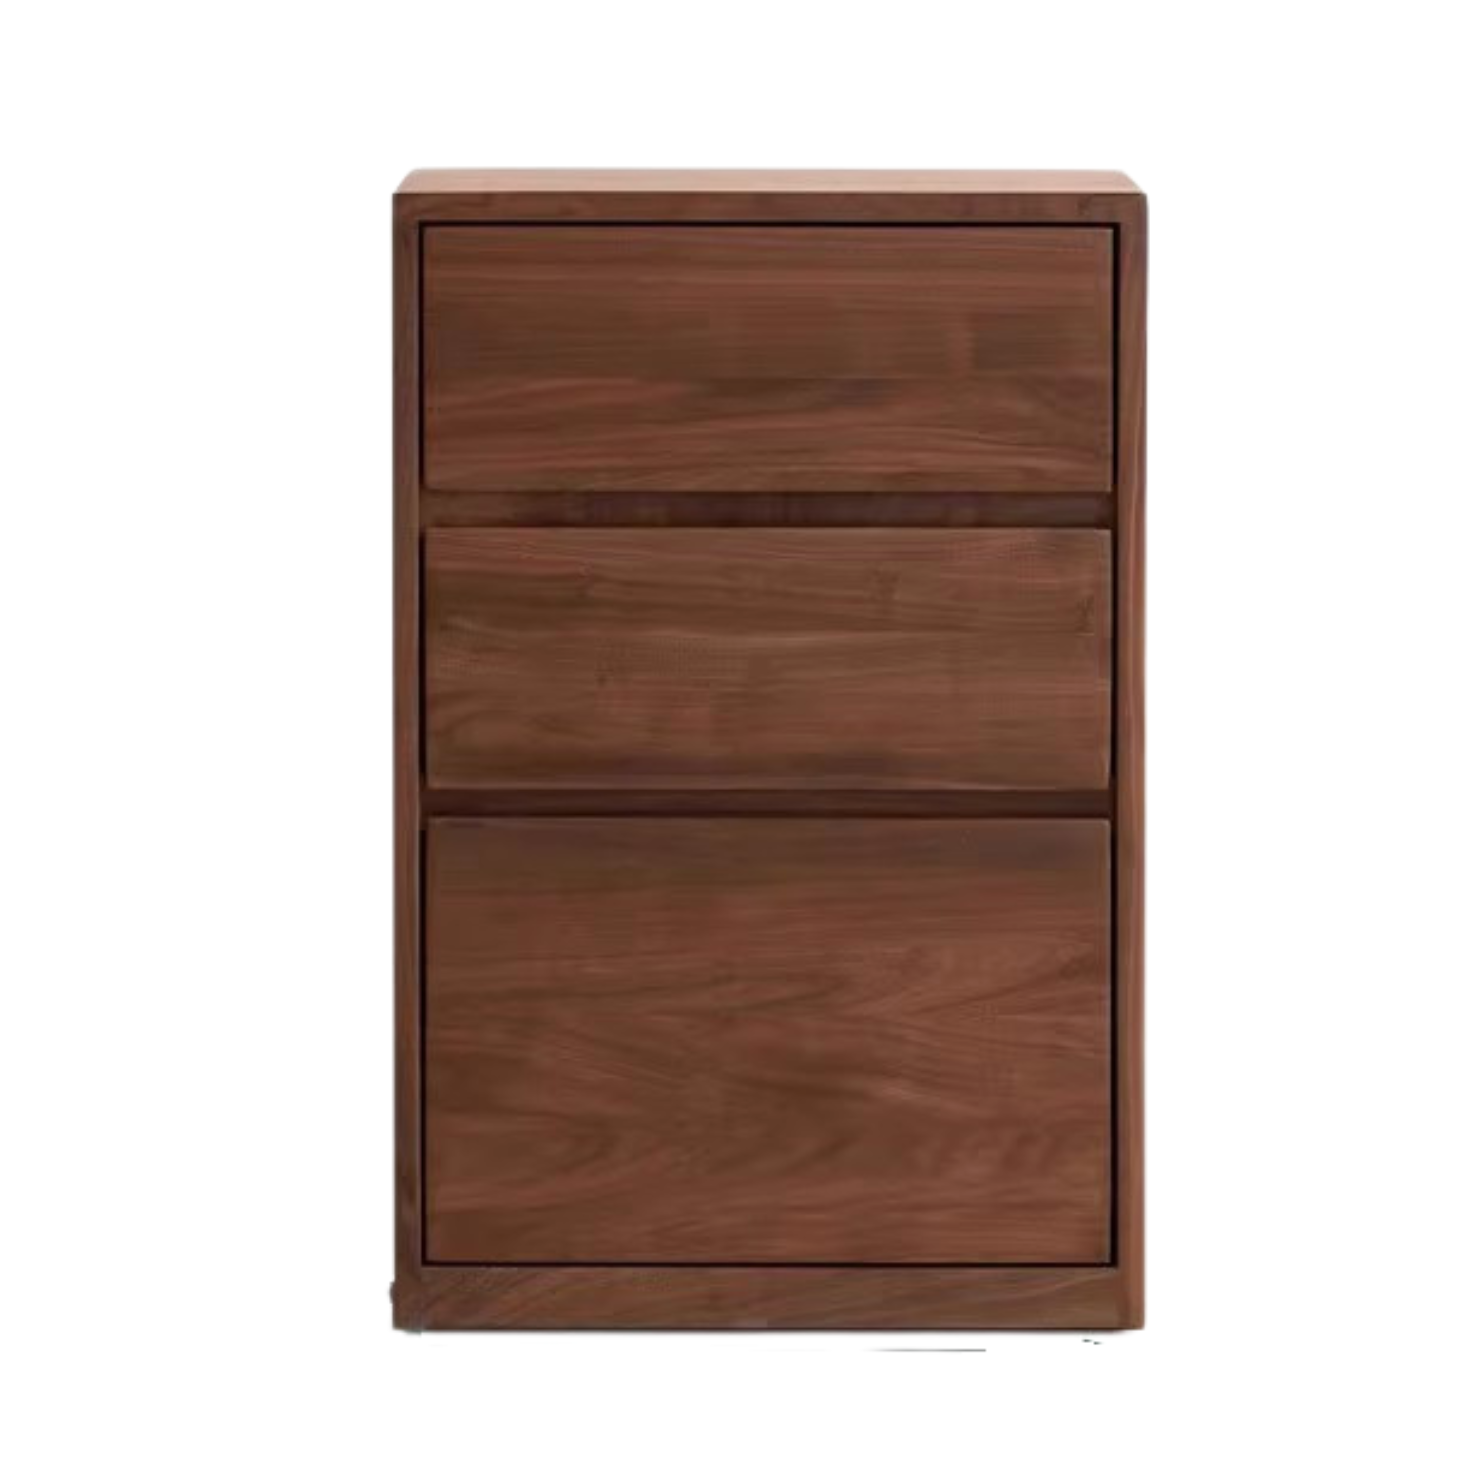 Black walnut solid wood low bookshelf wall combination floor-standing  cabinet -